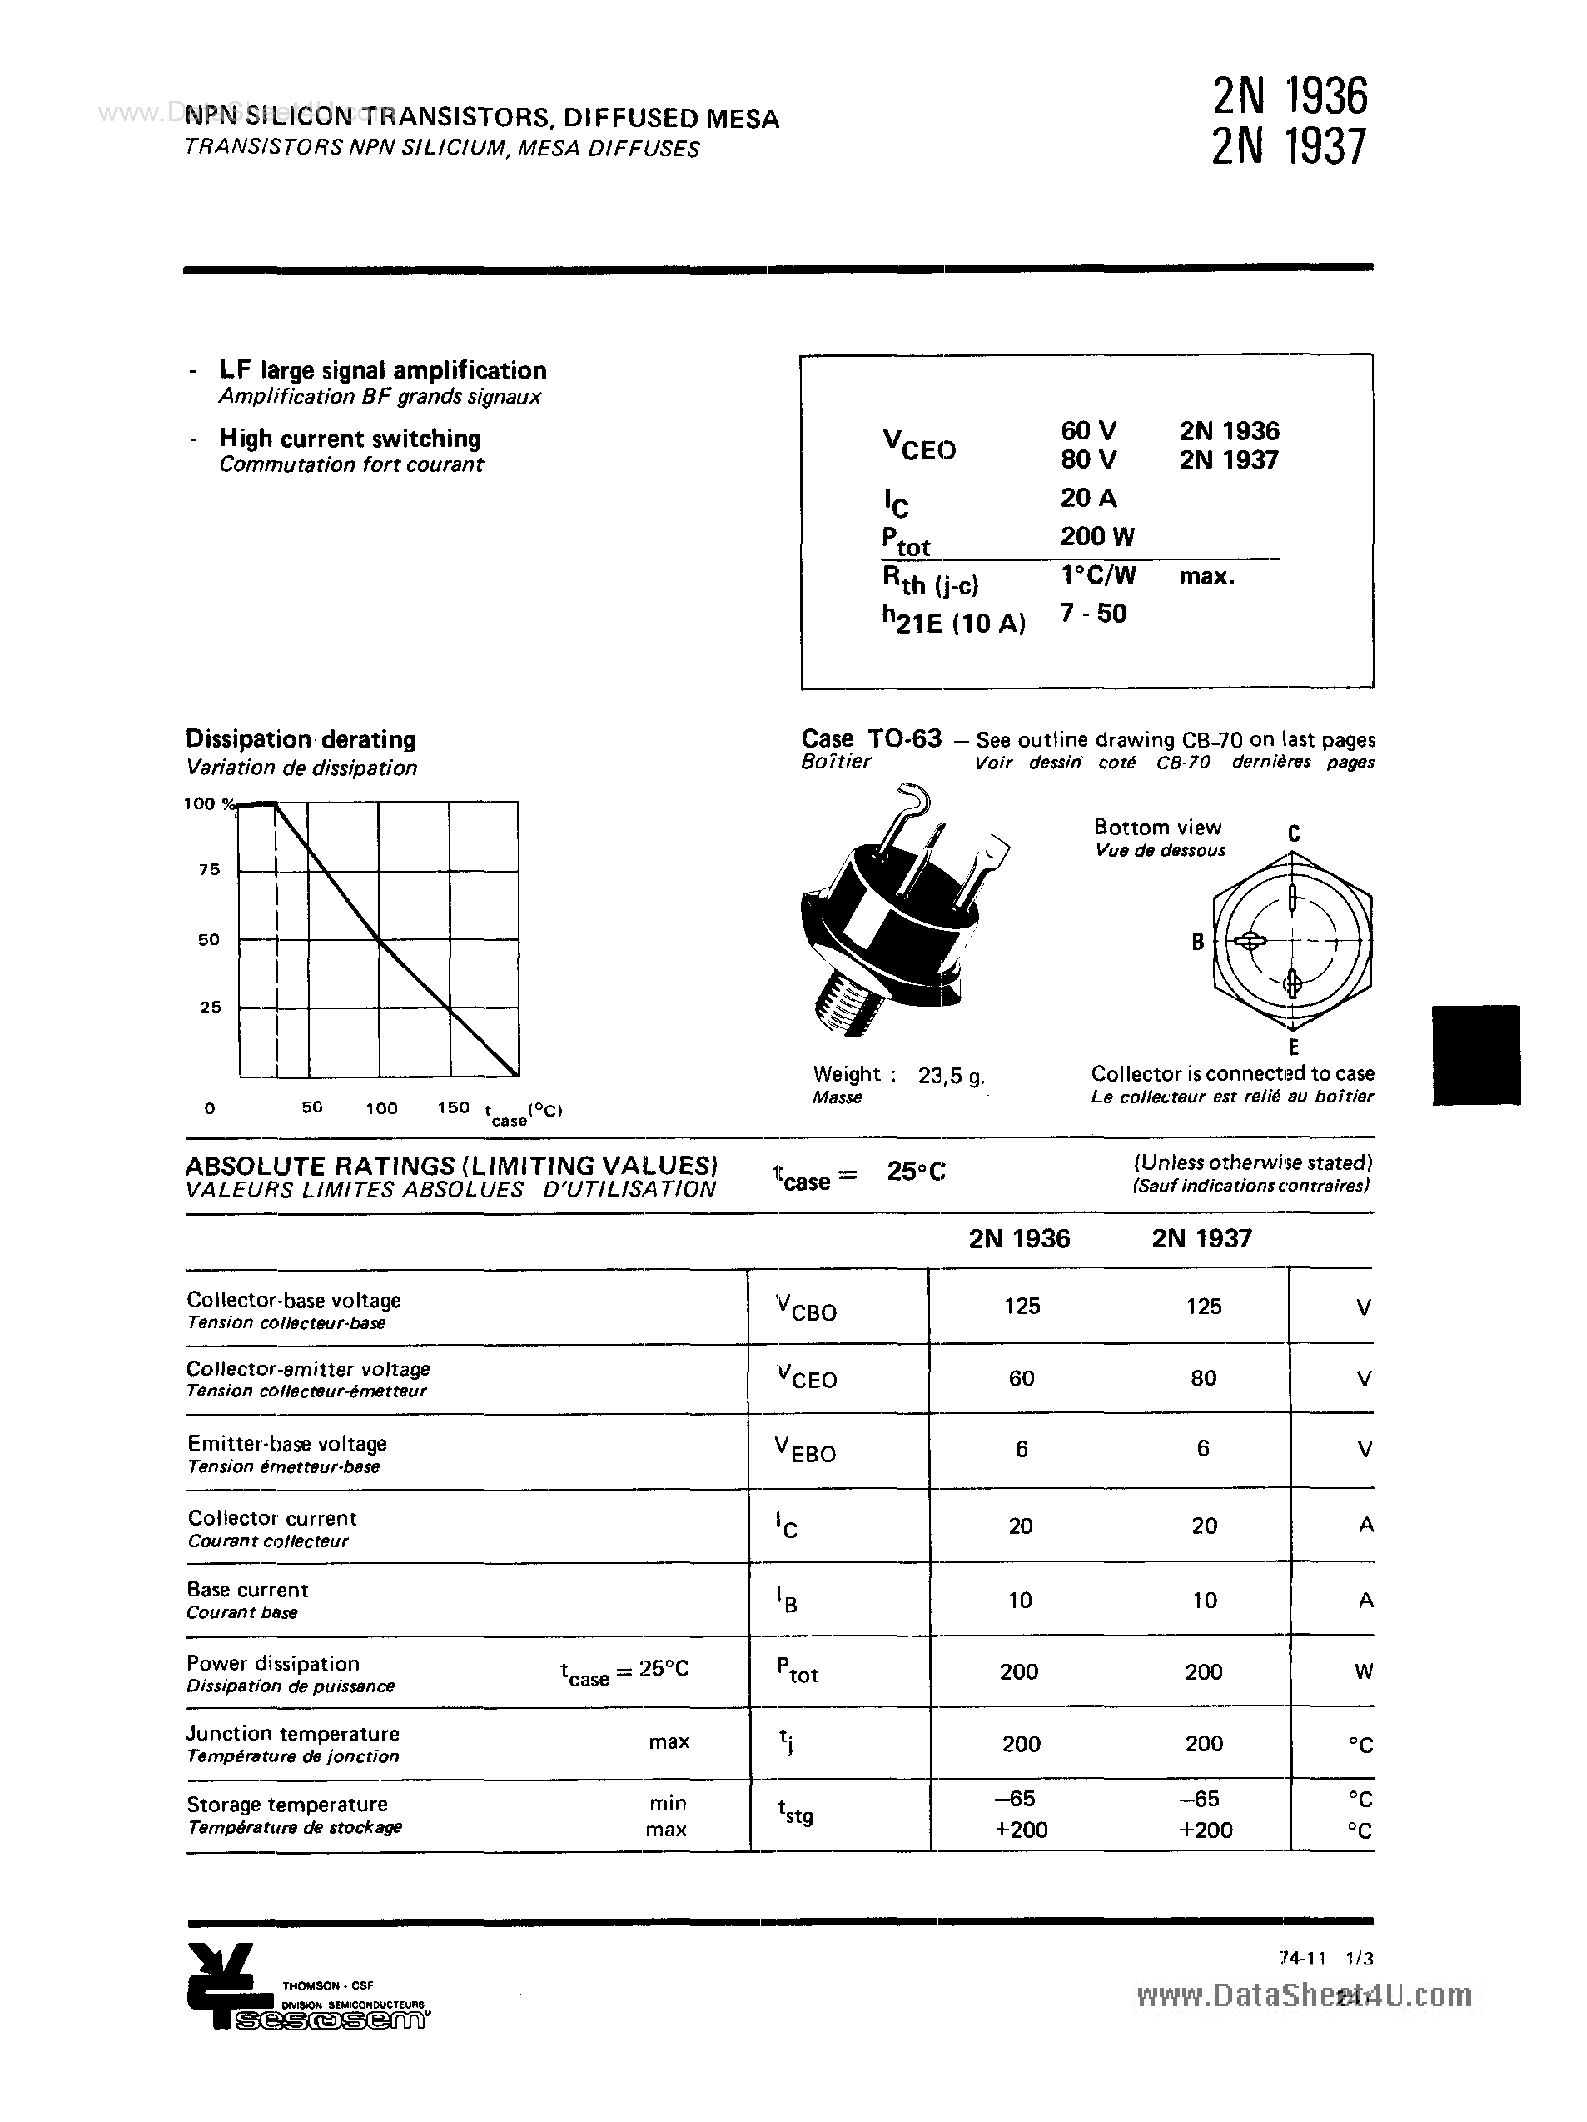 Datasheet 2N1936 - (2N1936 / 2N1937) Power Transistor page 1